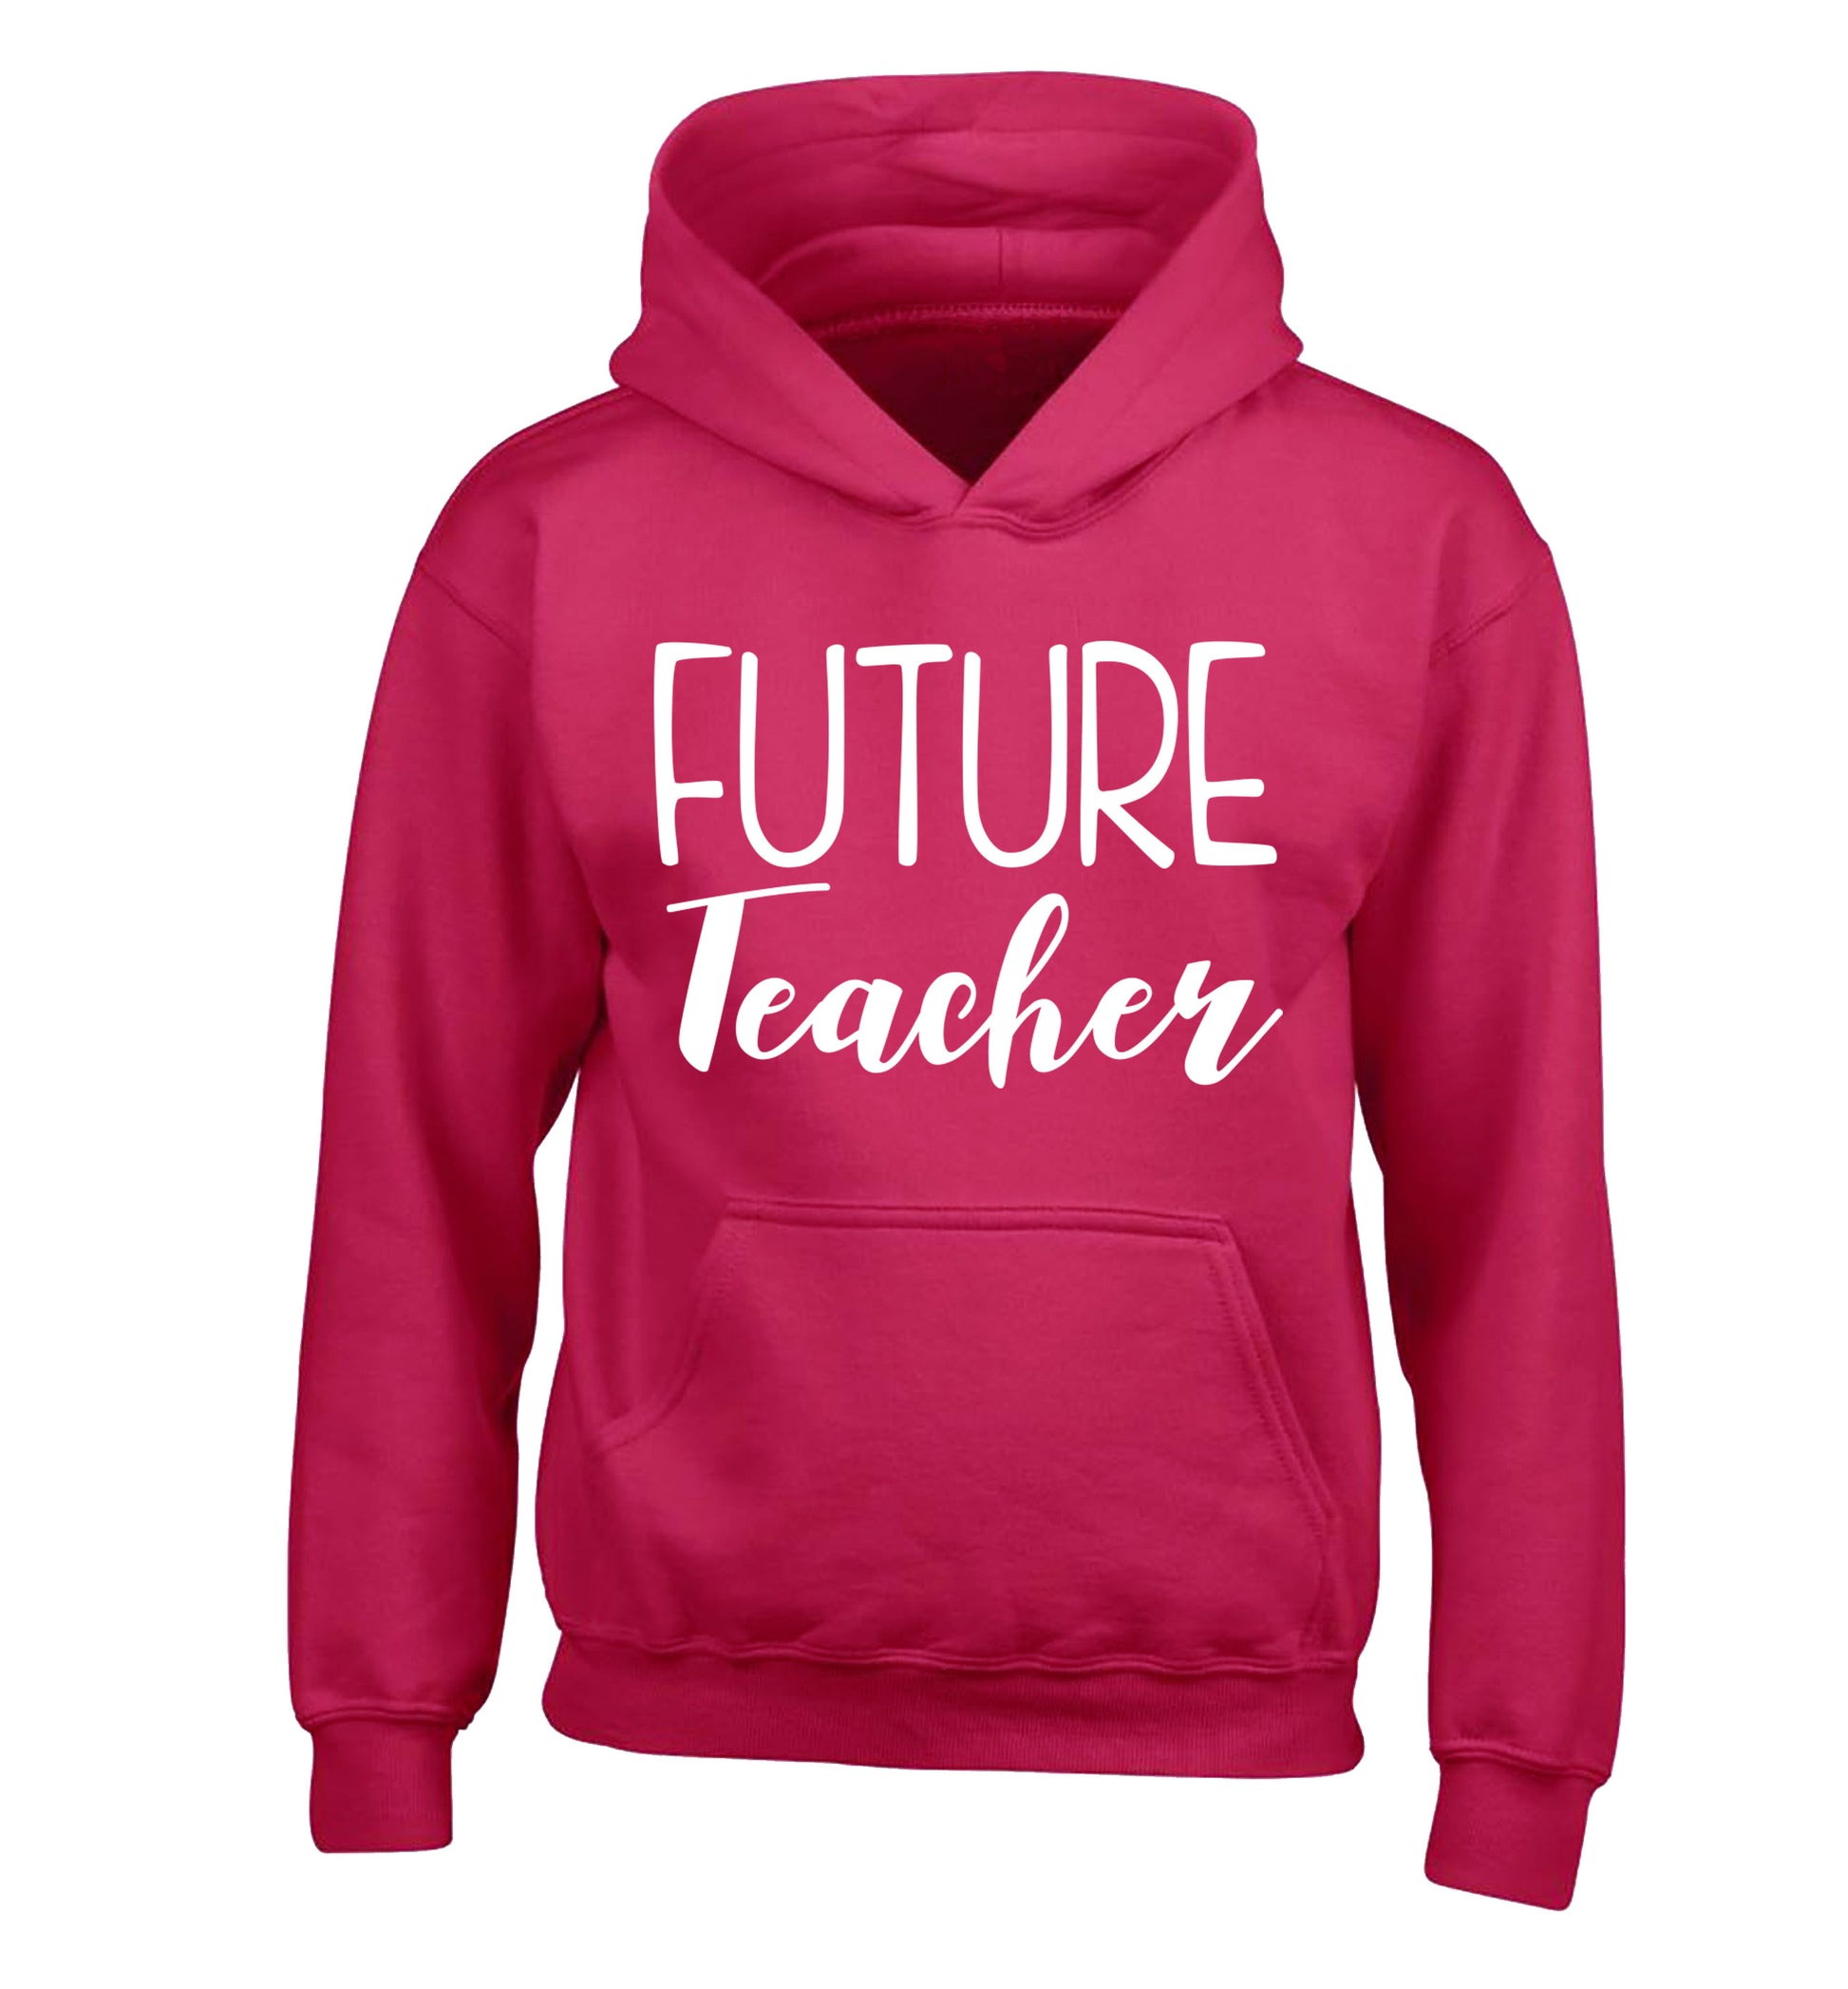 Future teacher children's pink hoodie 12-13 Years